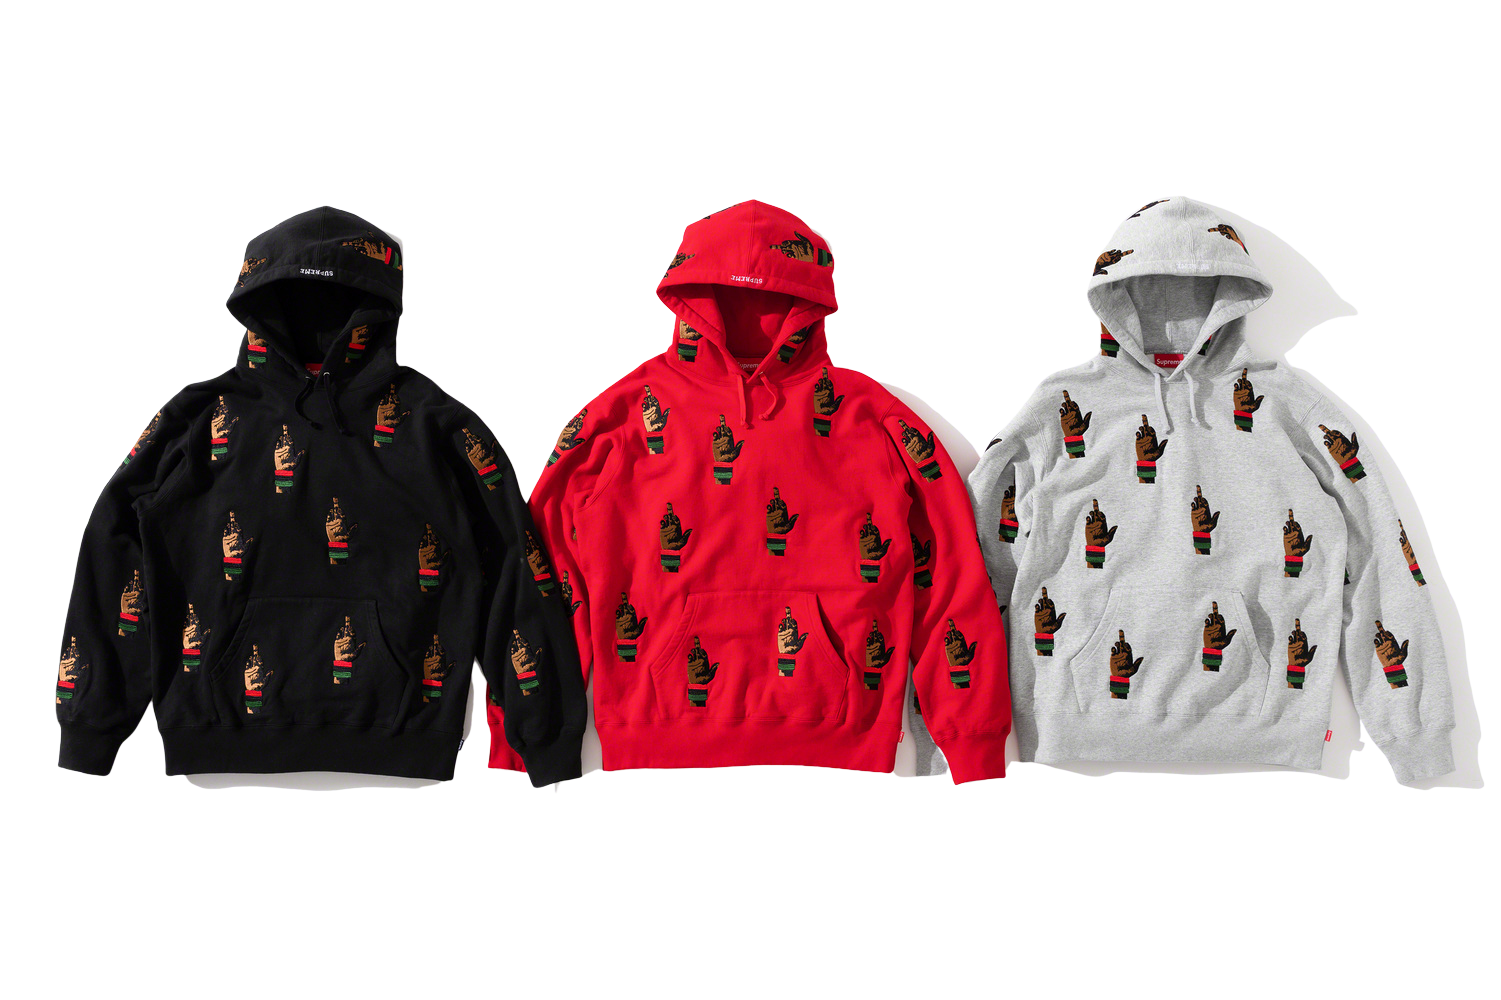 dead prez RBG Embroidered Hooded Sweatshirt - fall winter 2019 